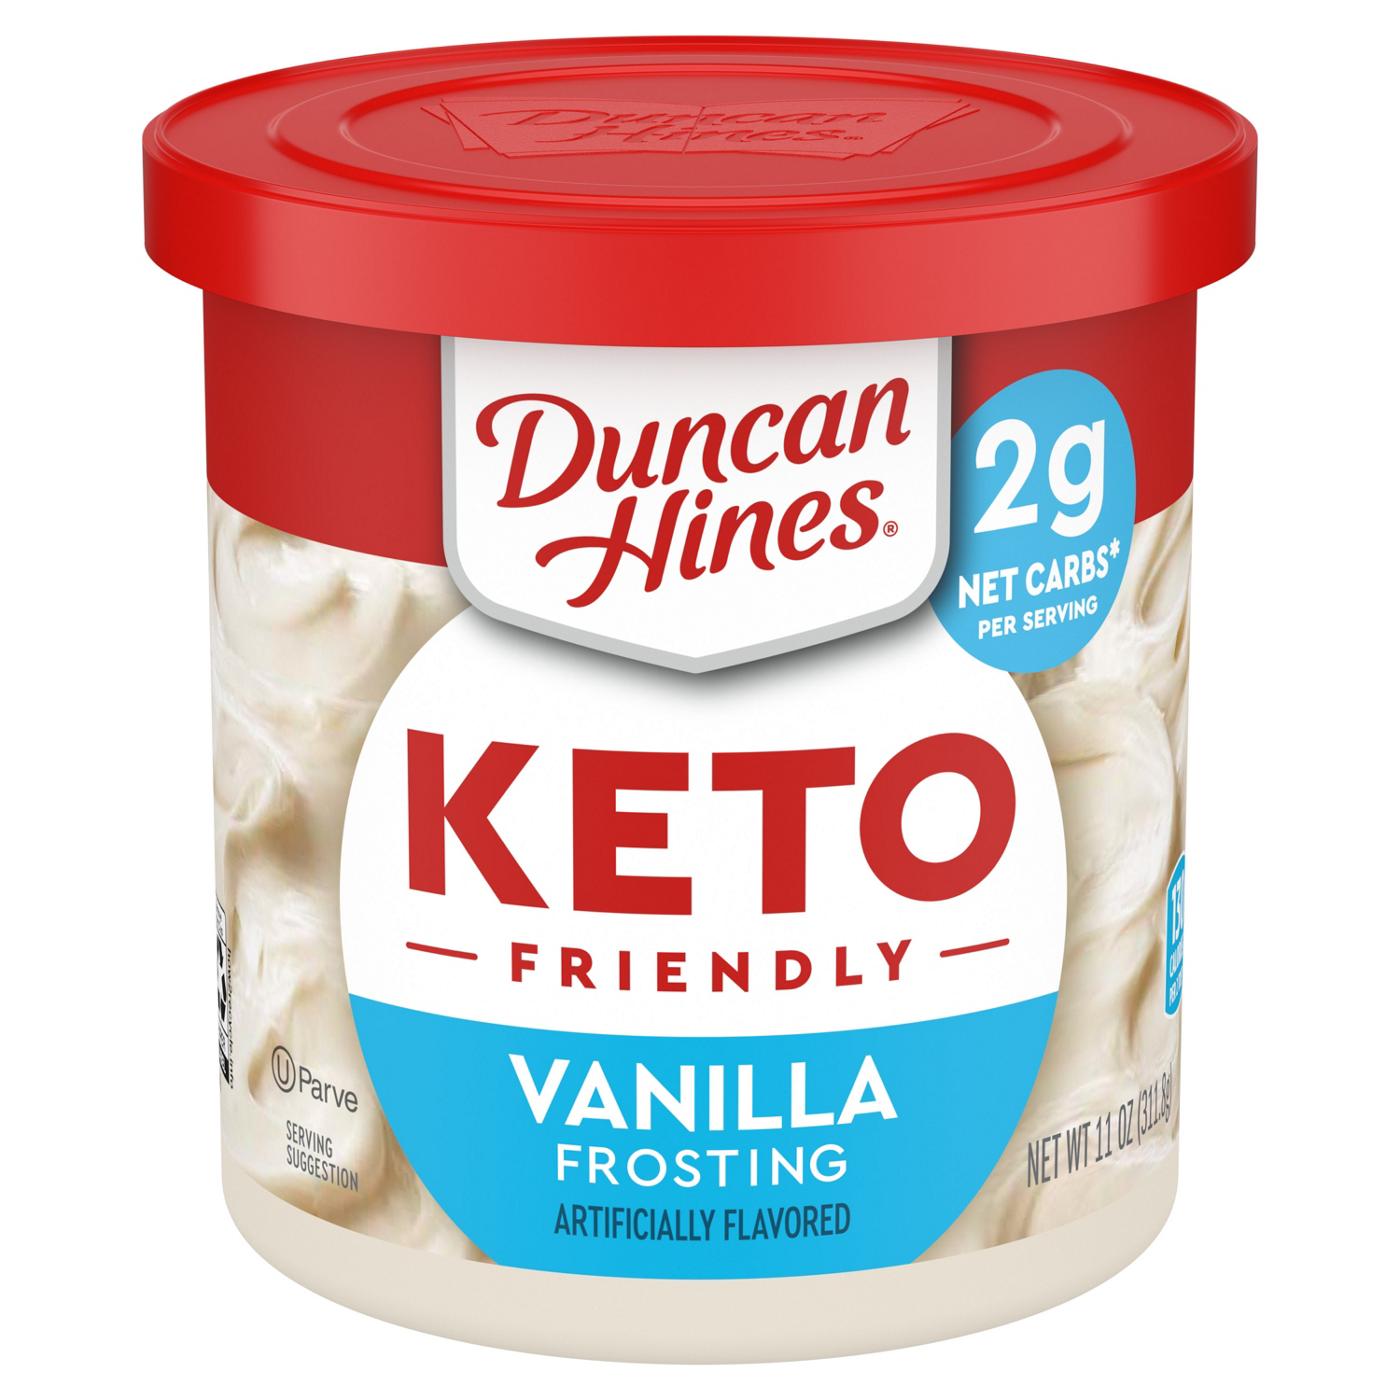 Duncan Hines Keto Friendly Vanilla Frosting; image 1 of 7